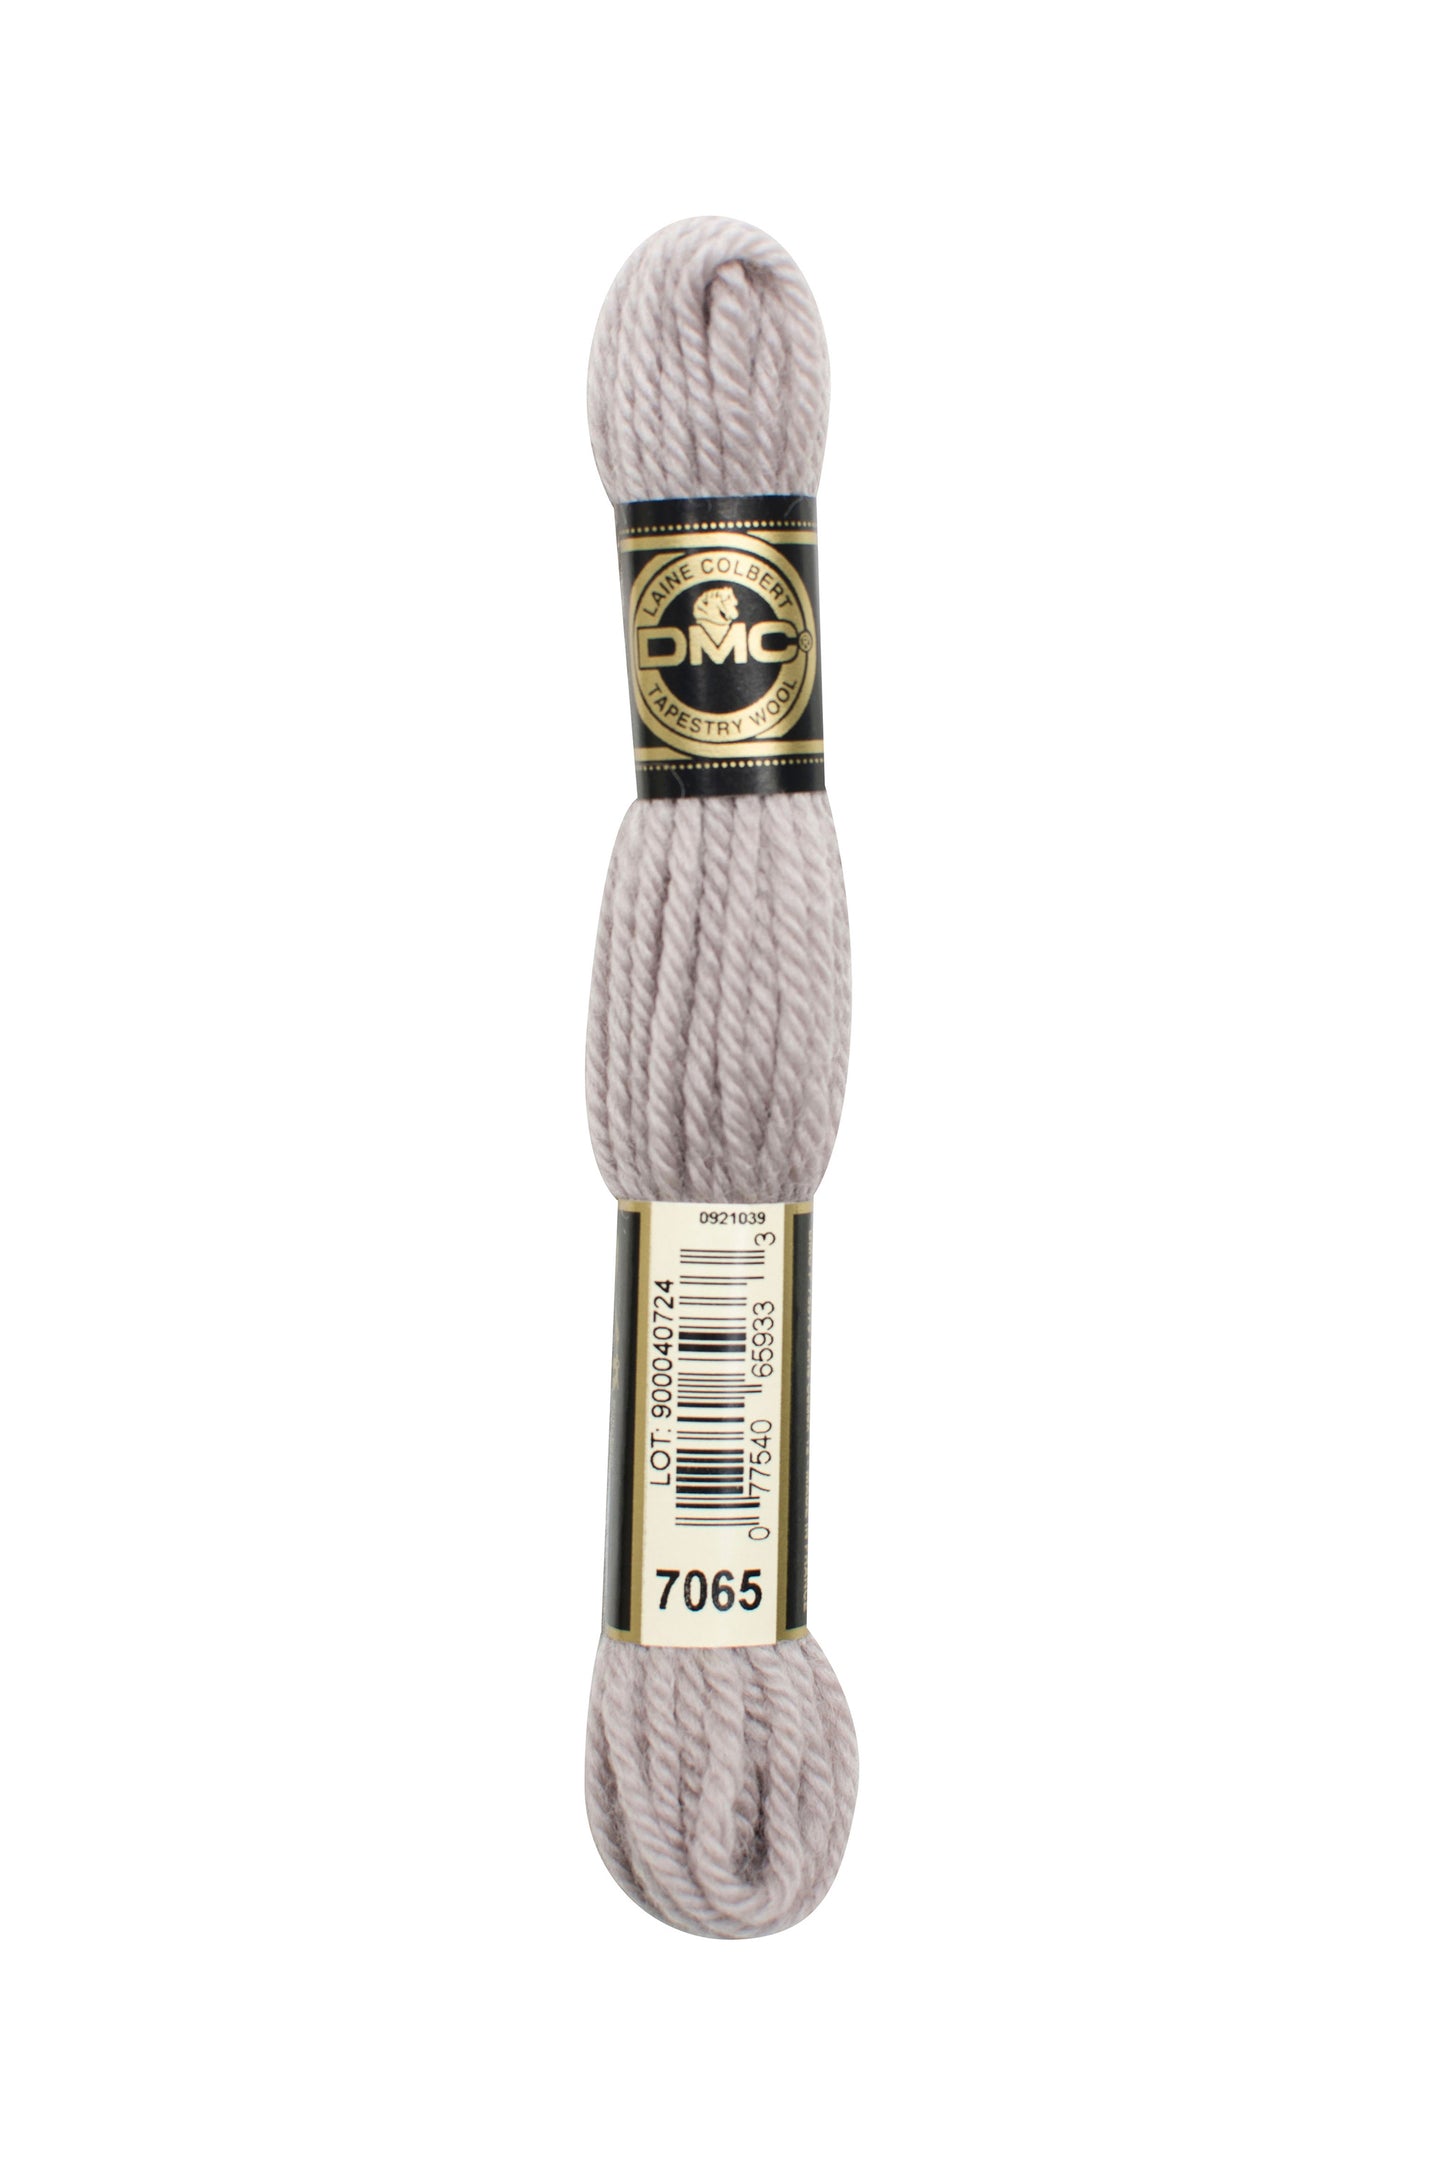 7026 – DMC Tapestry Wool